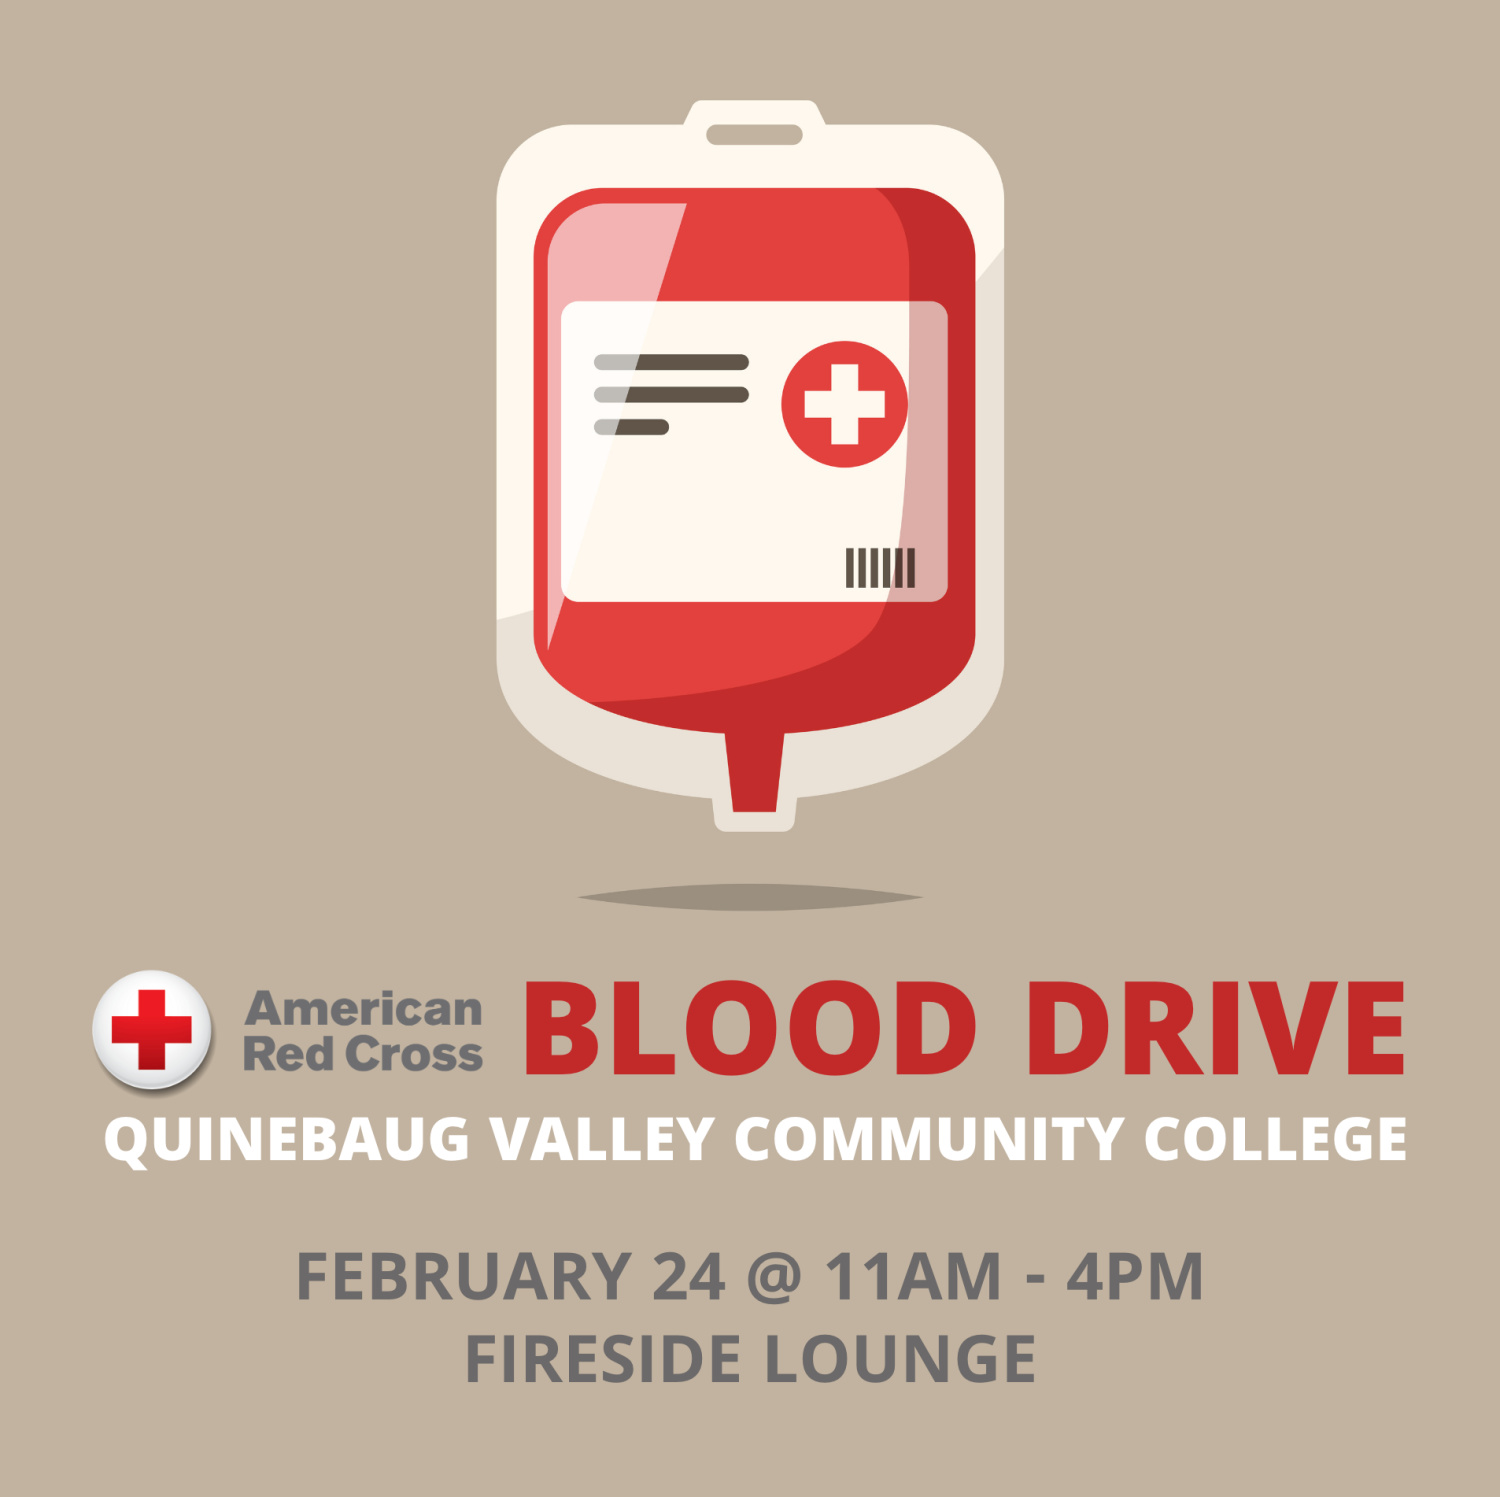 American Red Cross Blood Drive February 24 2020